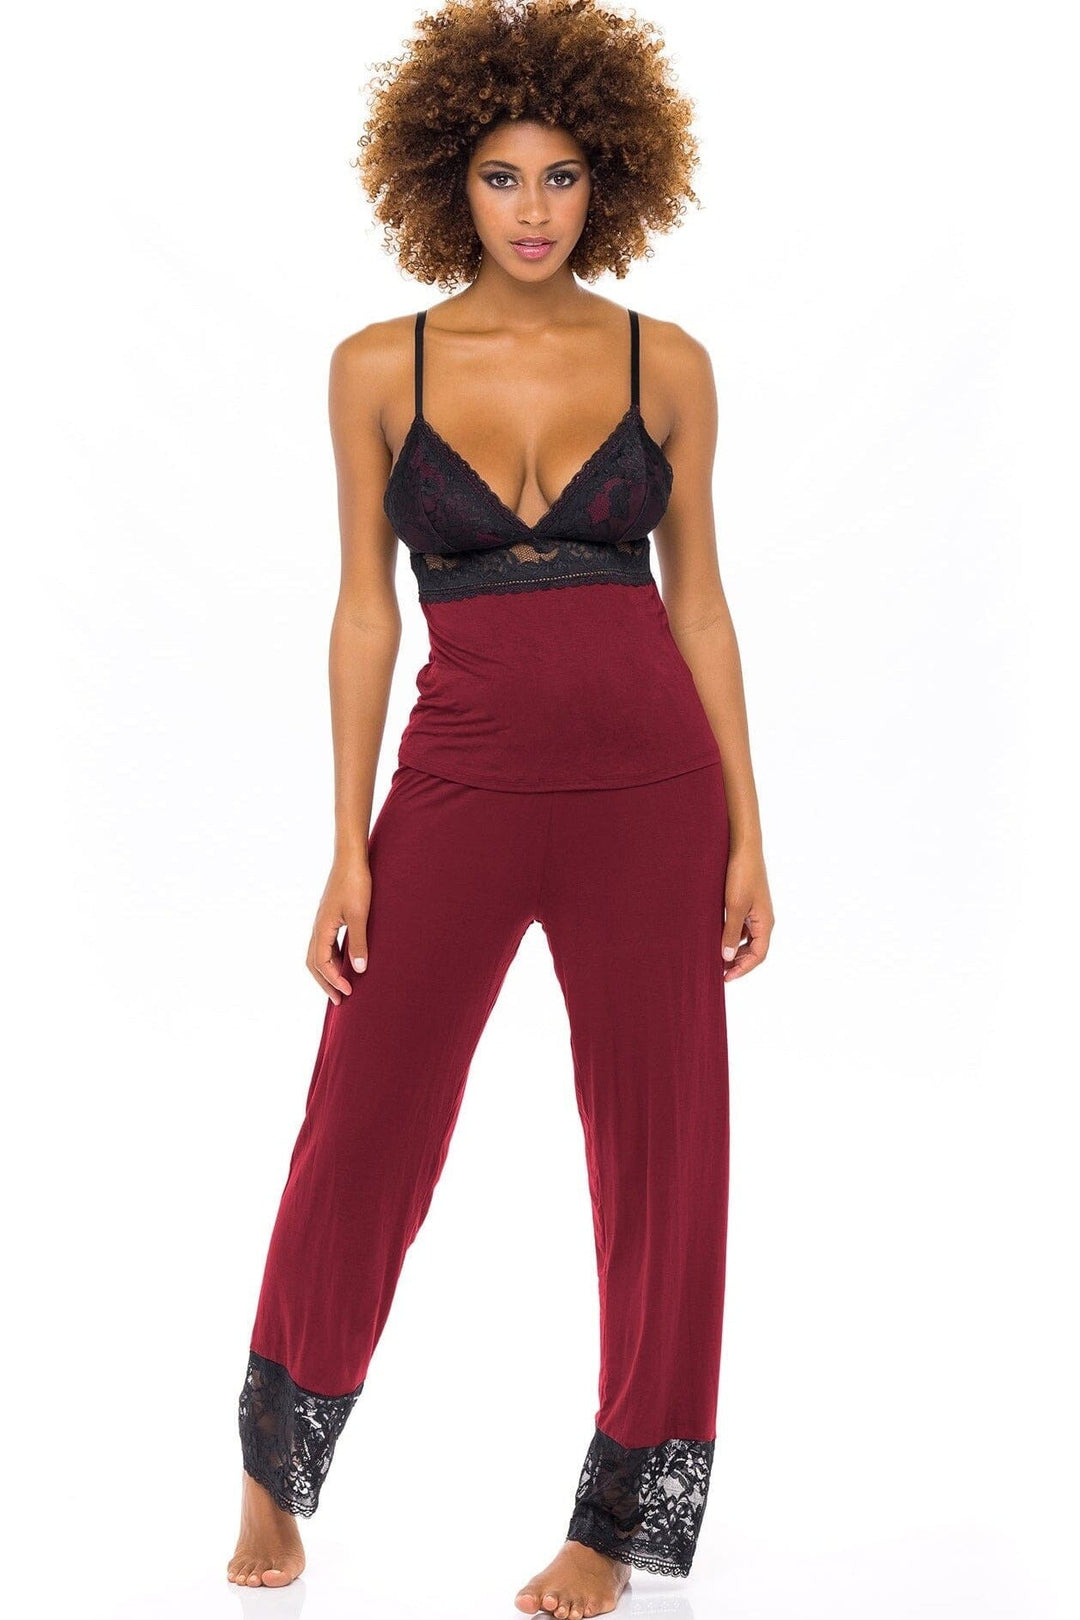 Camisole With Matching Pant Set-Sleepwear-Oh La La Cheri-Red-S/M-SEXYSHOES.COM